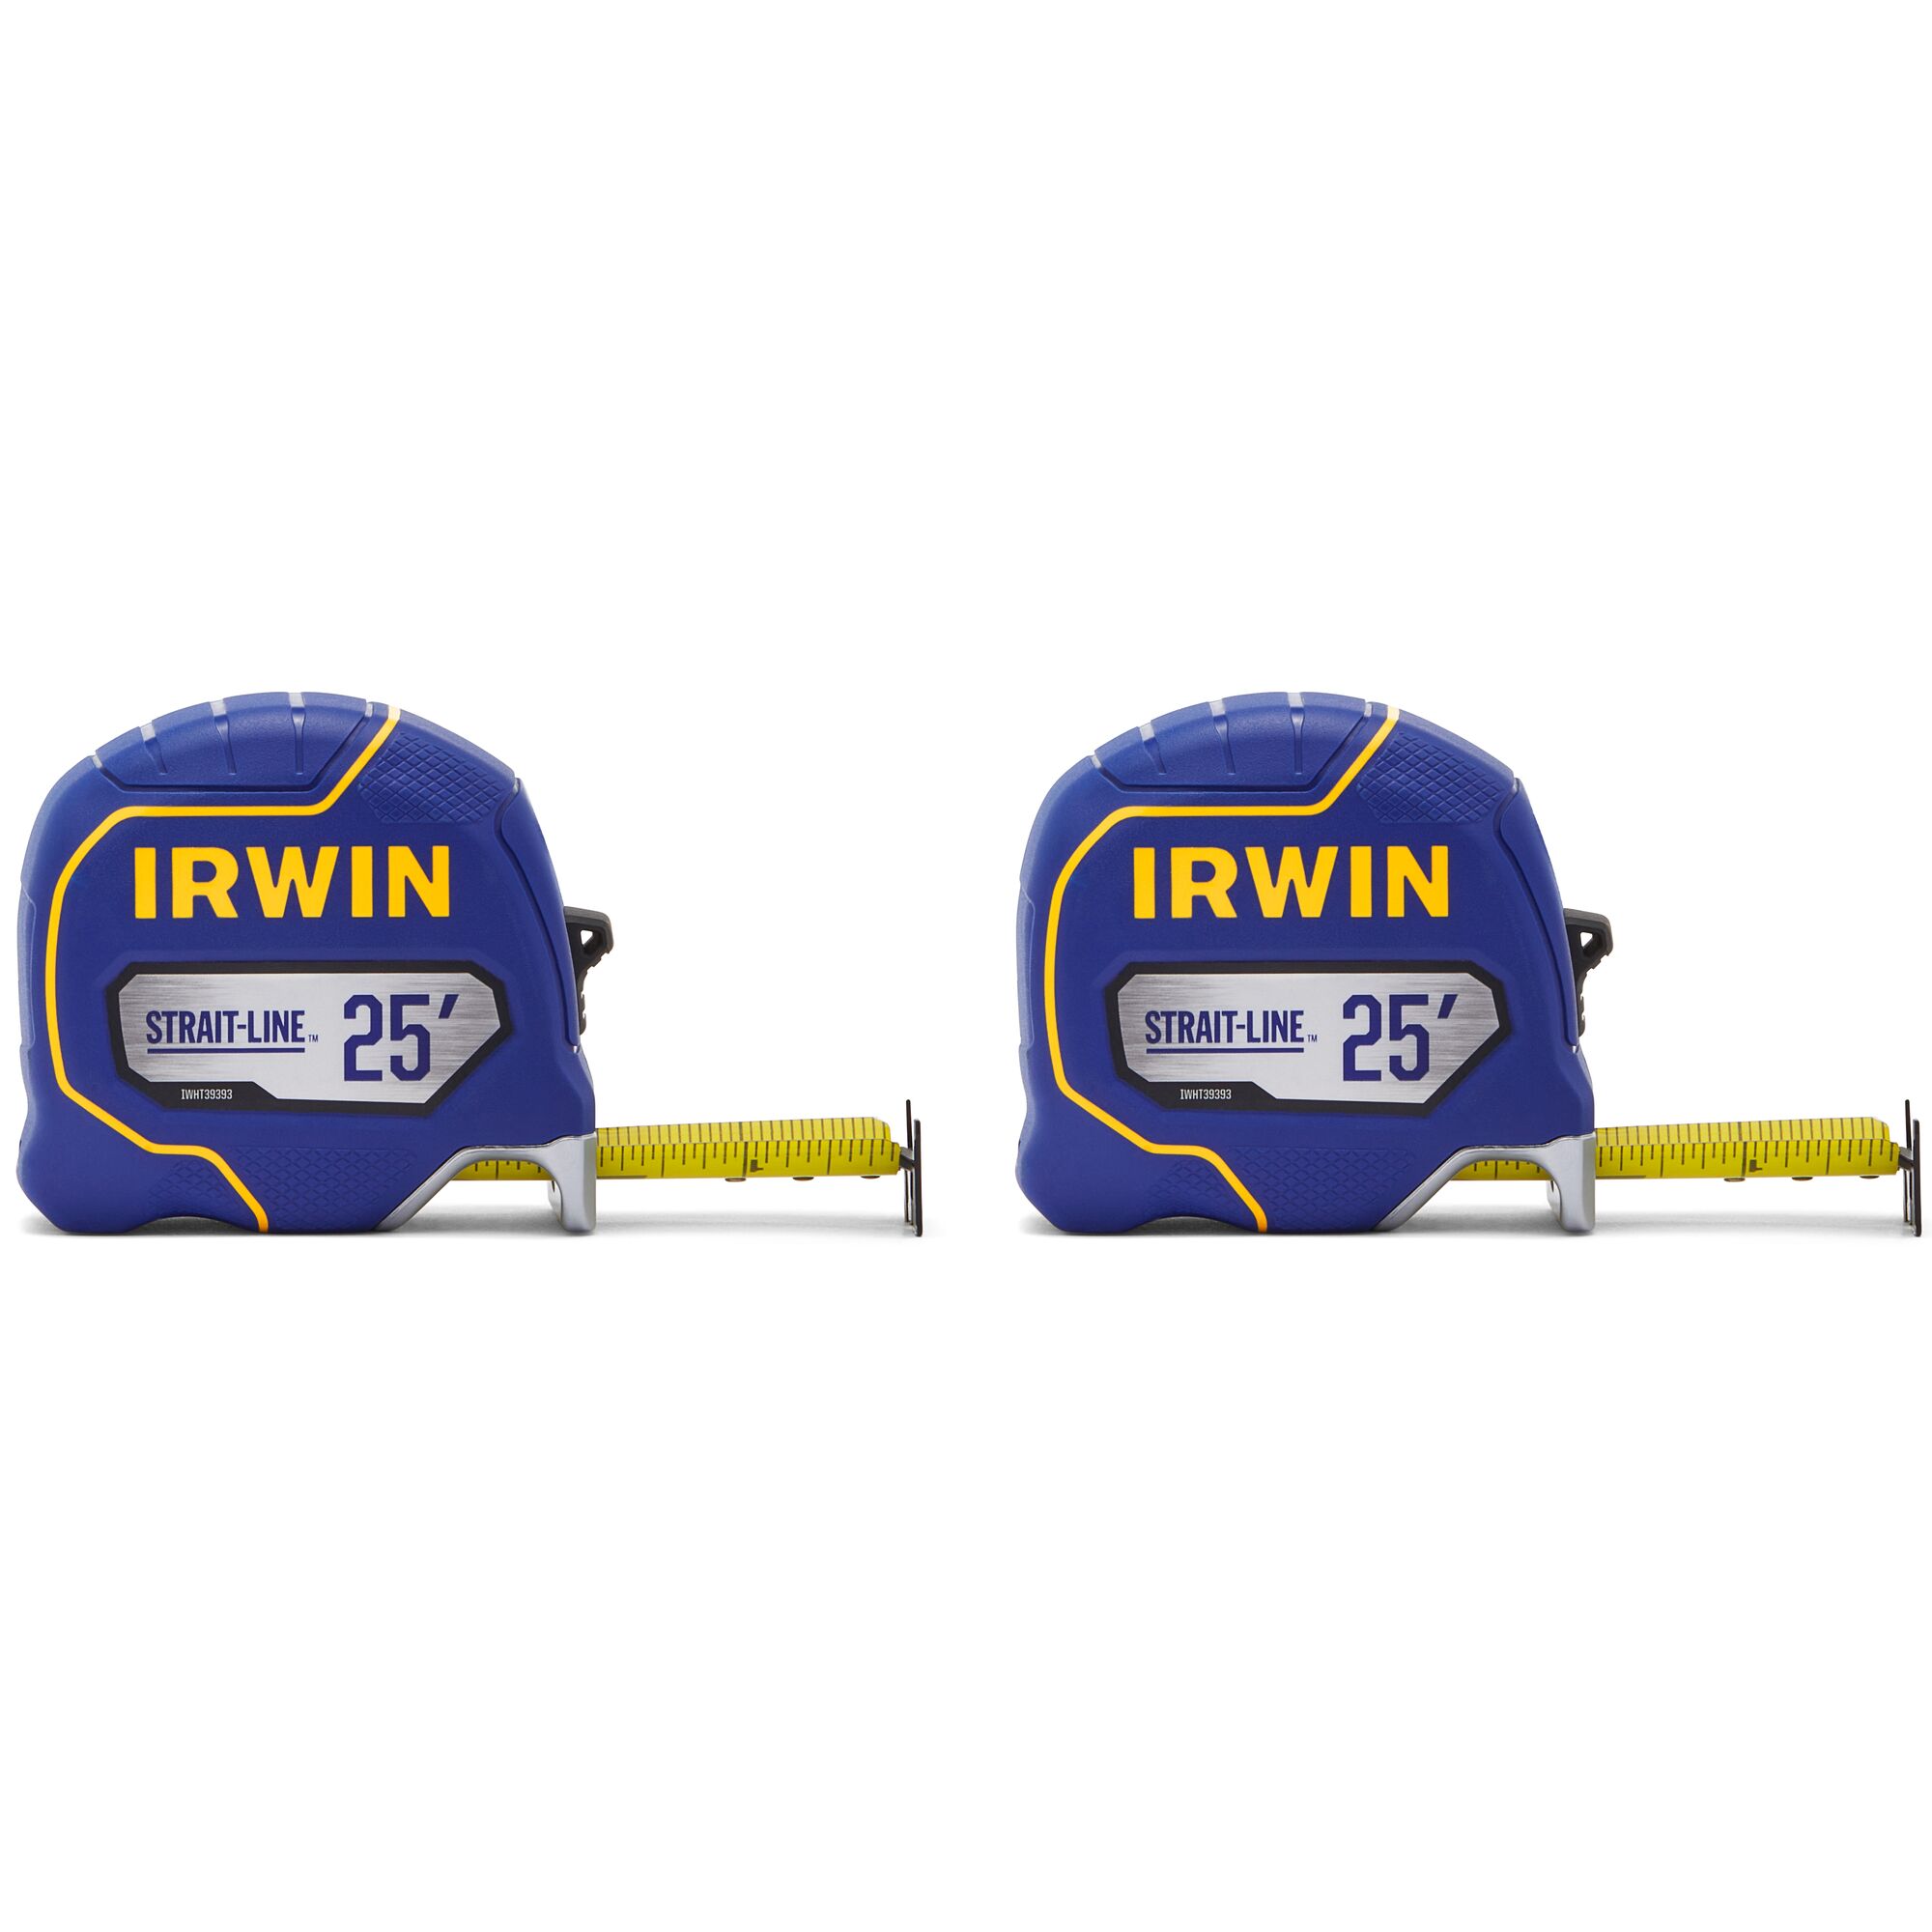 Irwin Strait-Line 16-ft Tape Measure | IWHT39391S